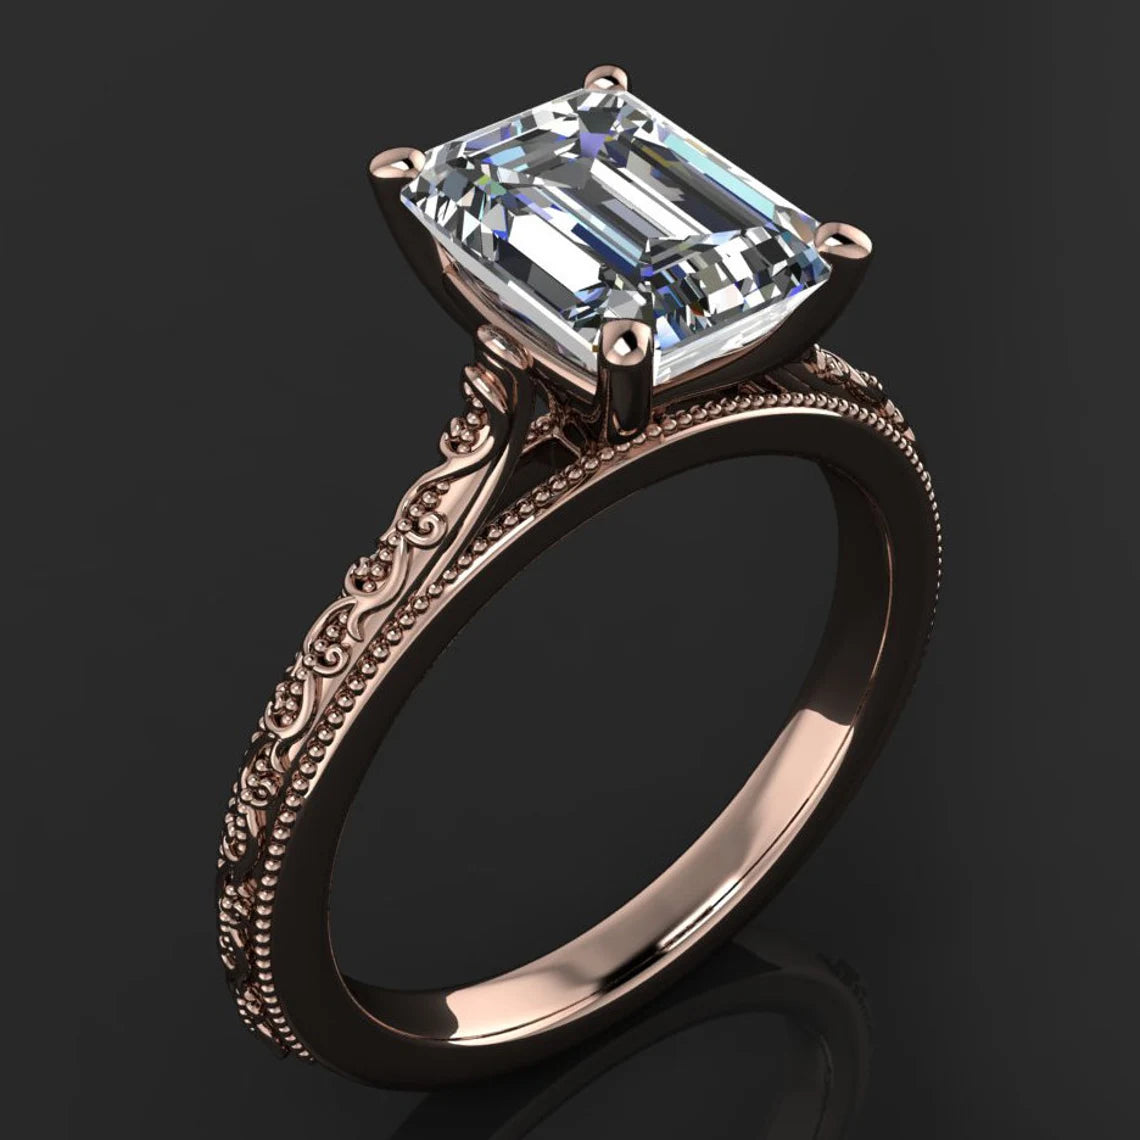 perla ring - 2 carat emerald cut NEO moissanite engagement ring - J Hollywood Designs